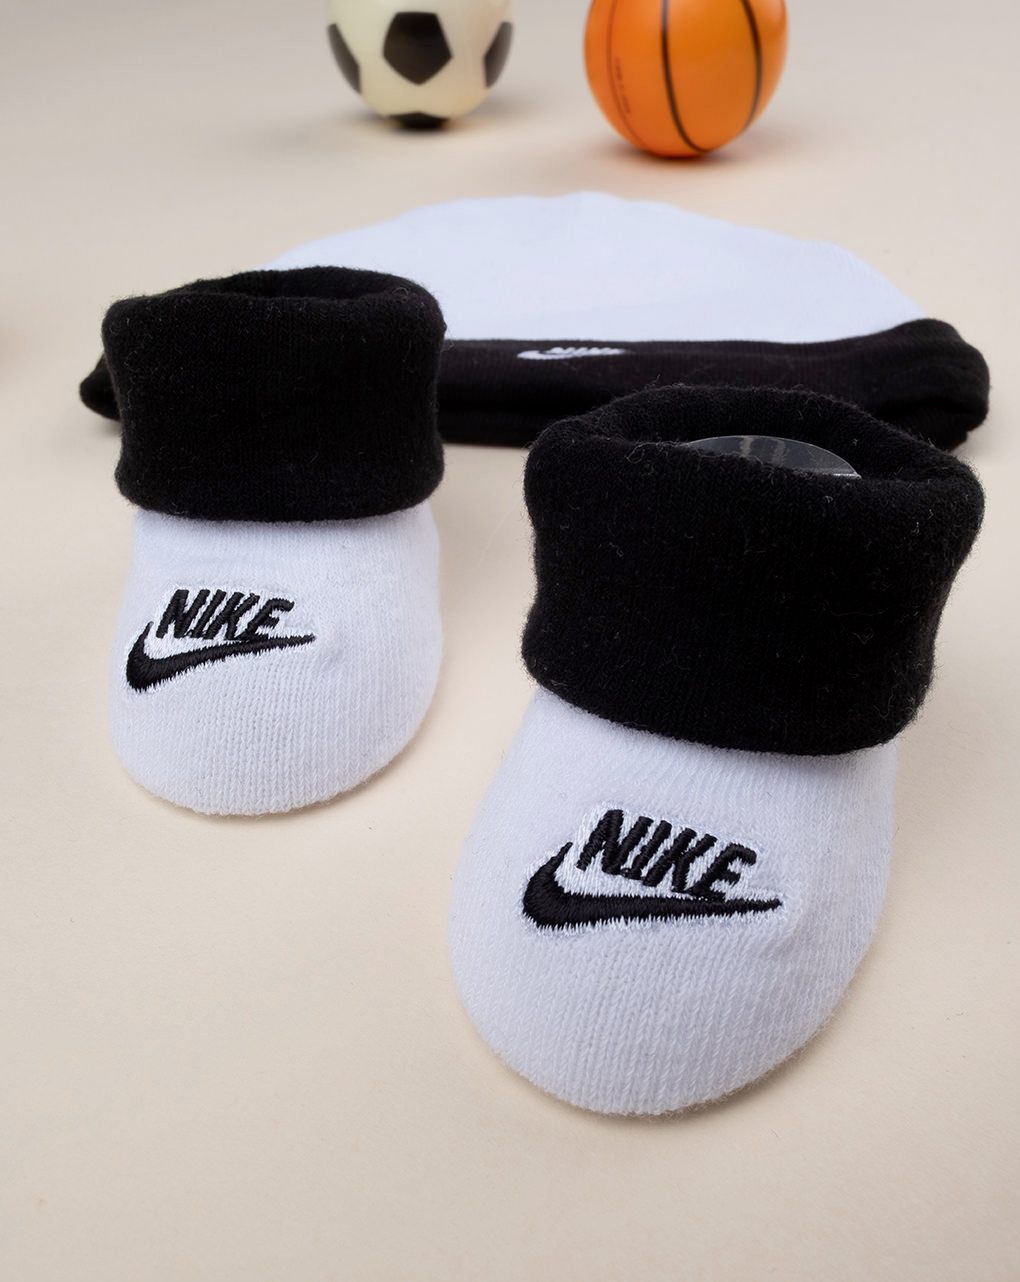 Conjunto de 3 peças tampa nike + touca + sapatos preto e branco - Nike